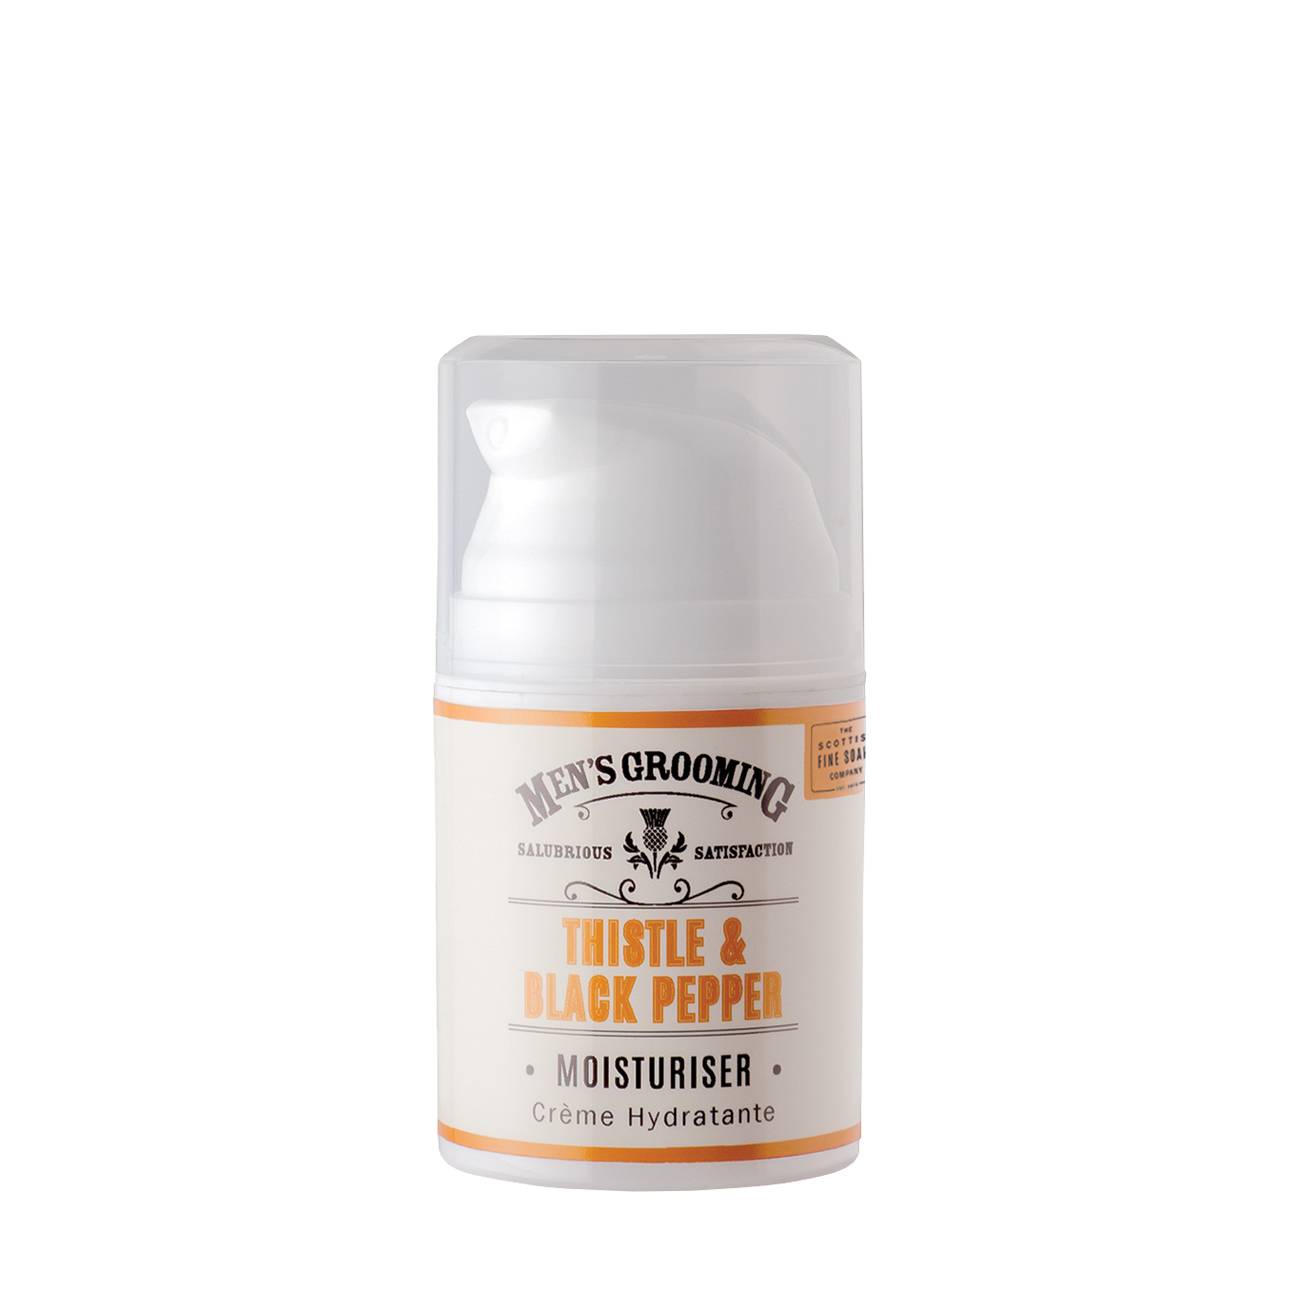 Thistle & Black Pepper Moisturiser 50 ml original Scottish Fine Soaps bestvalue